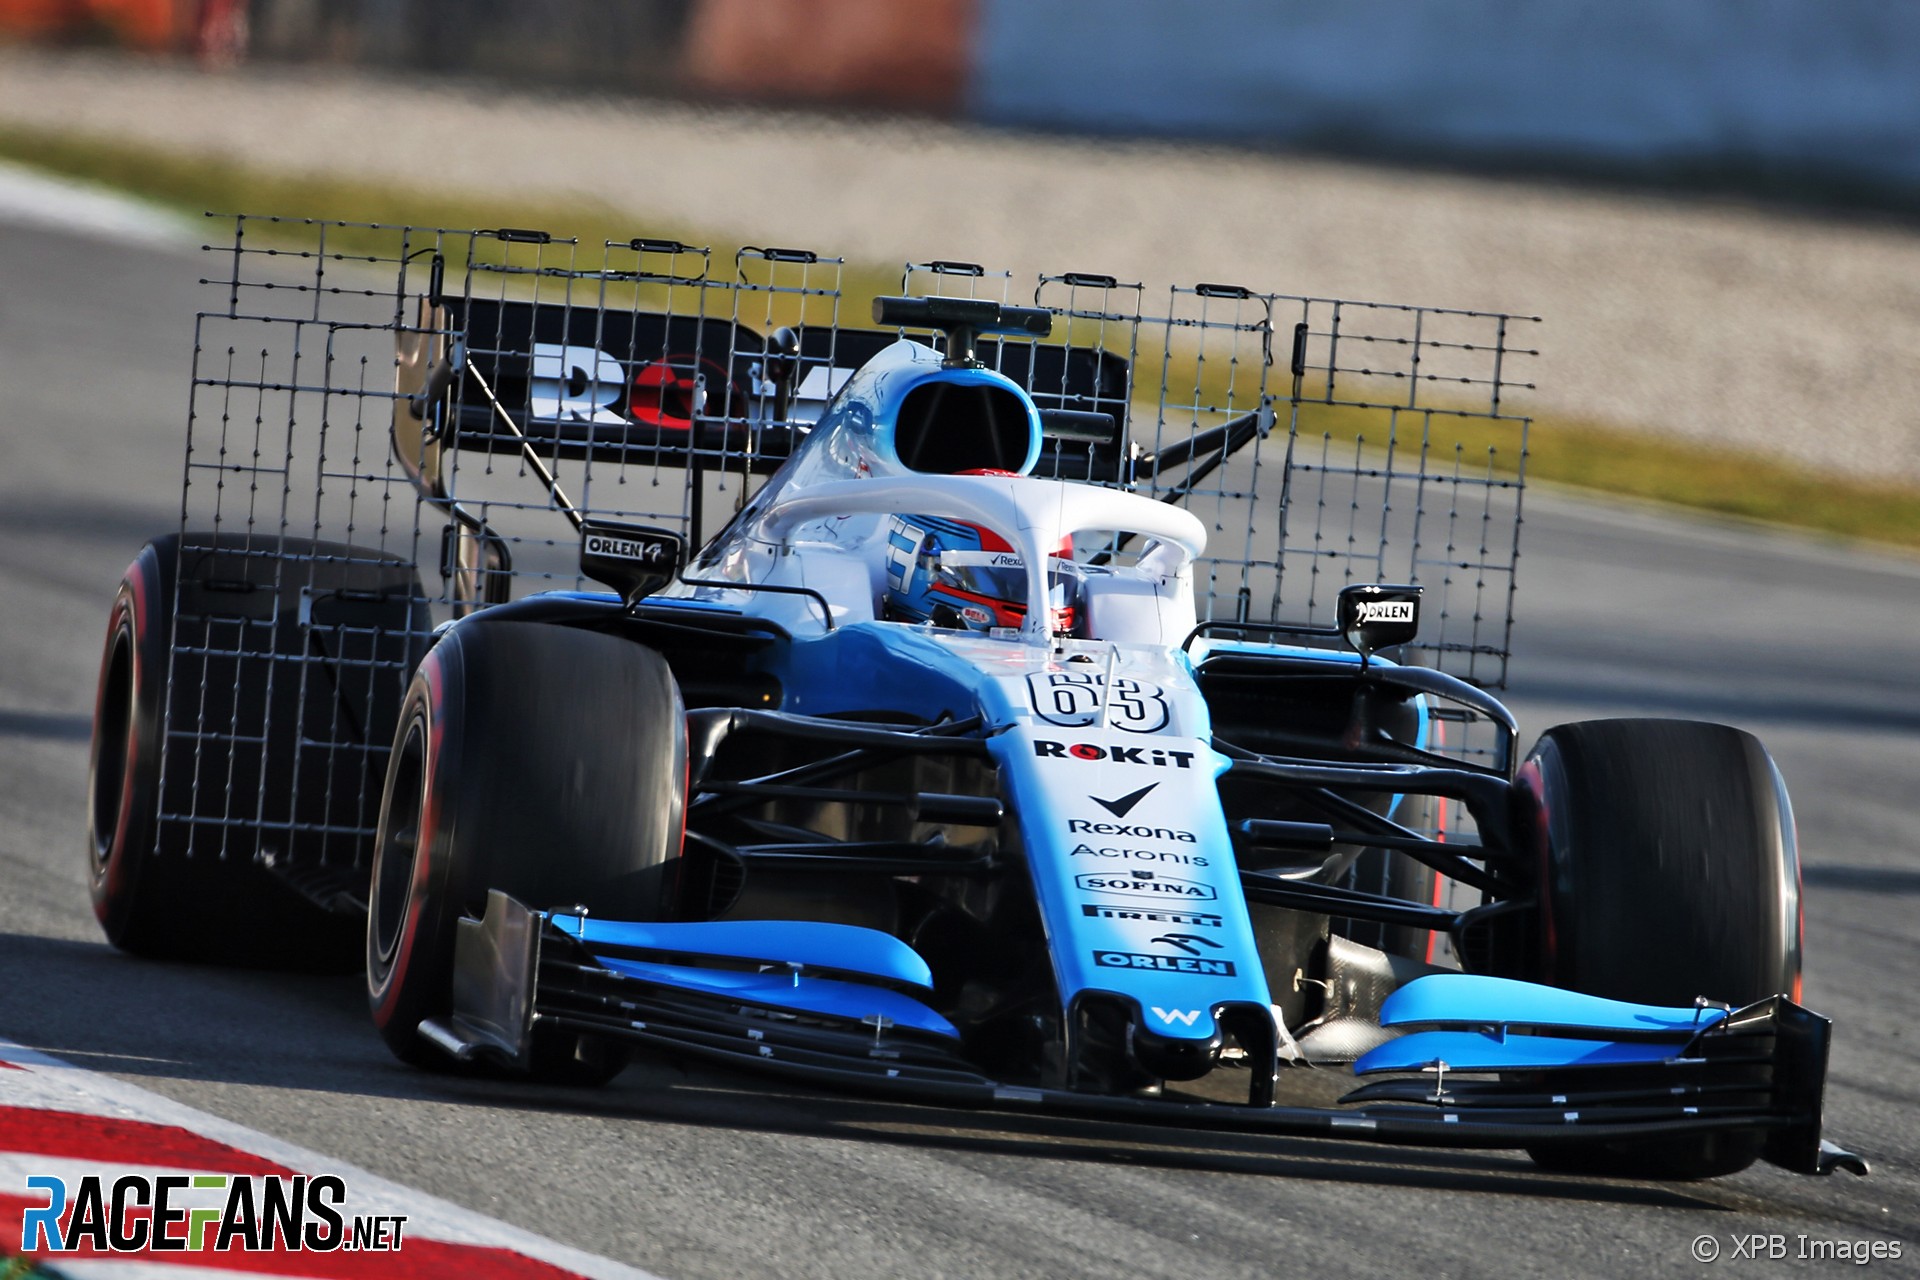 George Russell, Williams, Circuit de Catalunya, 2019